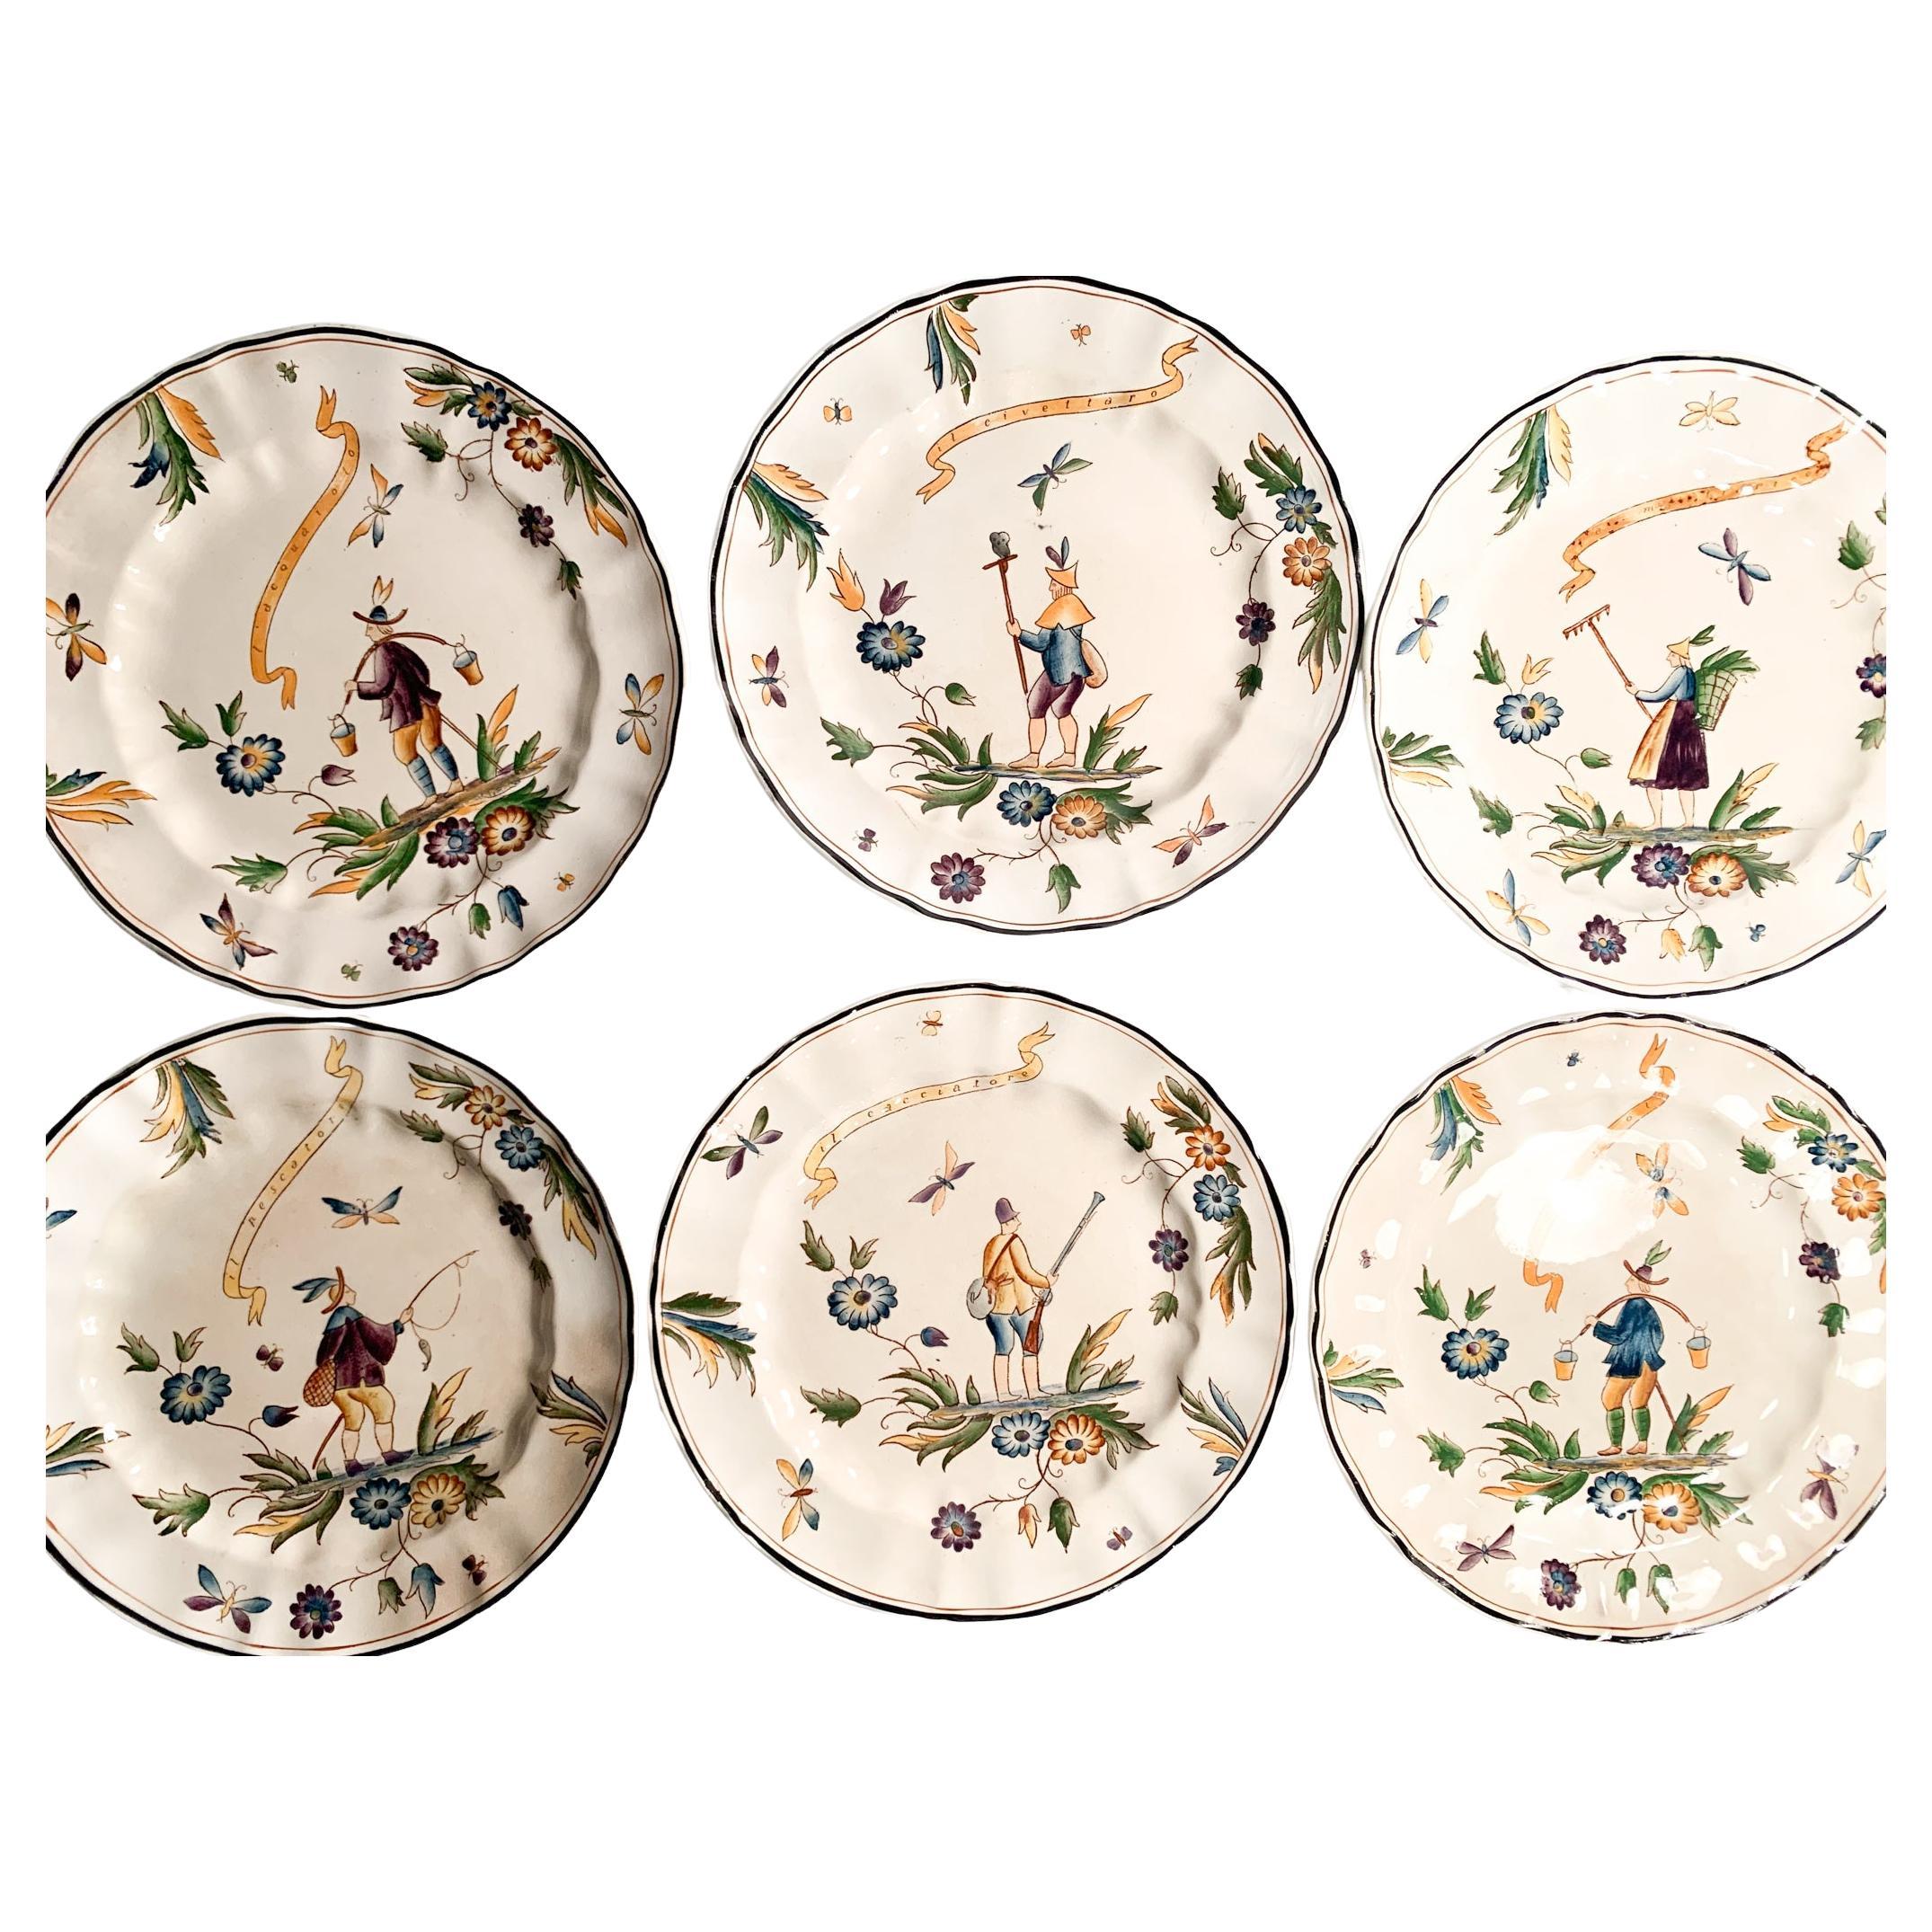 Set of 6 plates Gio Ponti Hermione collection for Richard Ginori, 1930s